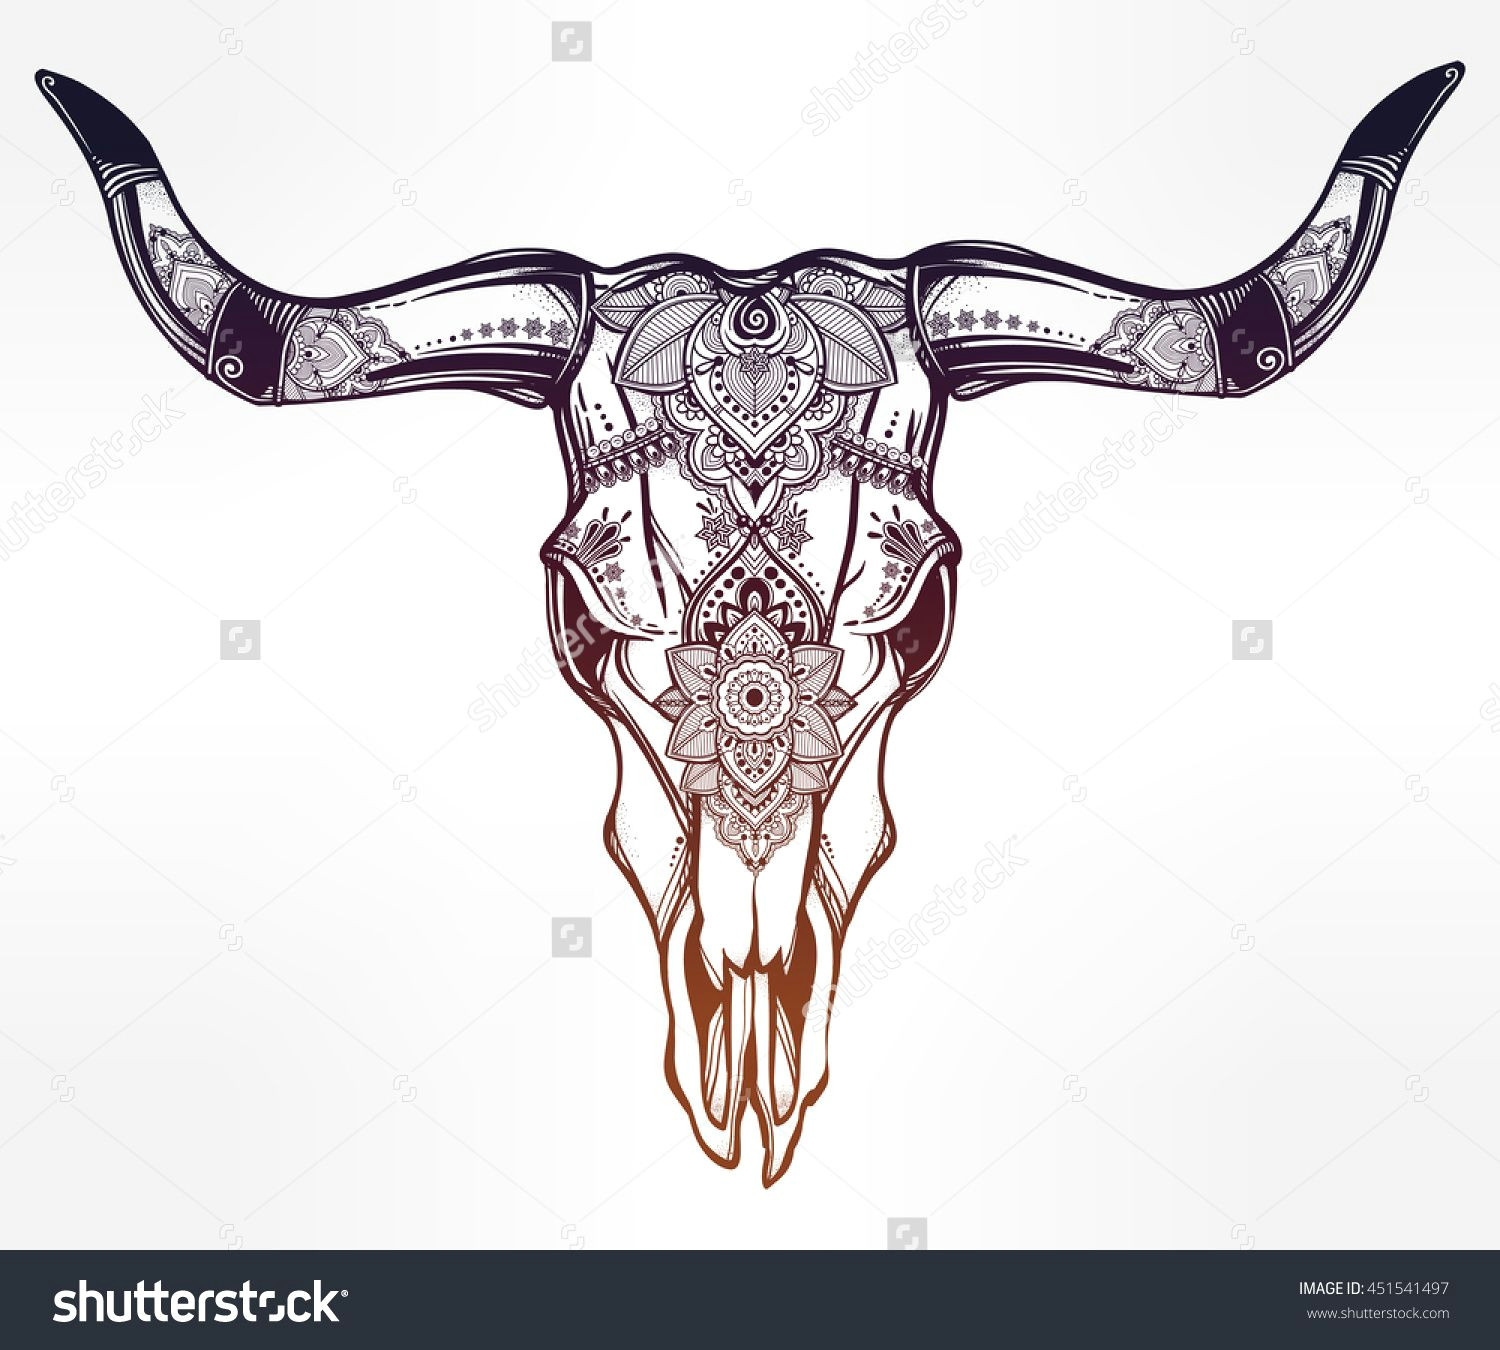 Drawing Longhorn Skull Hand Drawn Romantic Tattoo Style ornate Decorative Desert Cow or